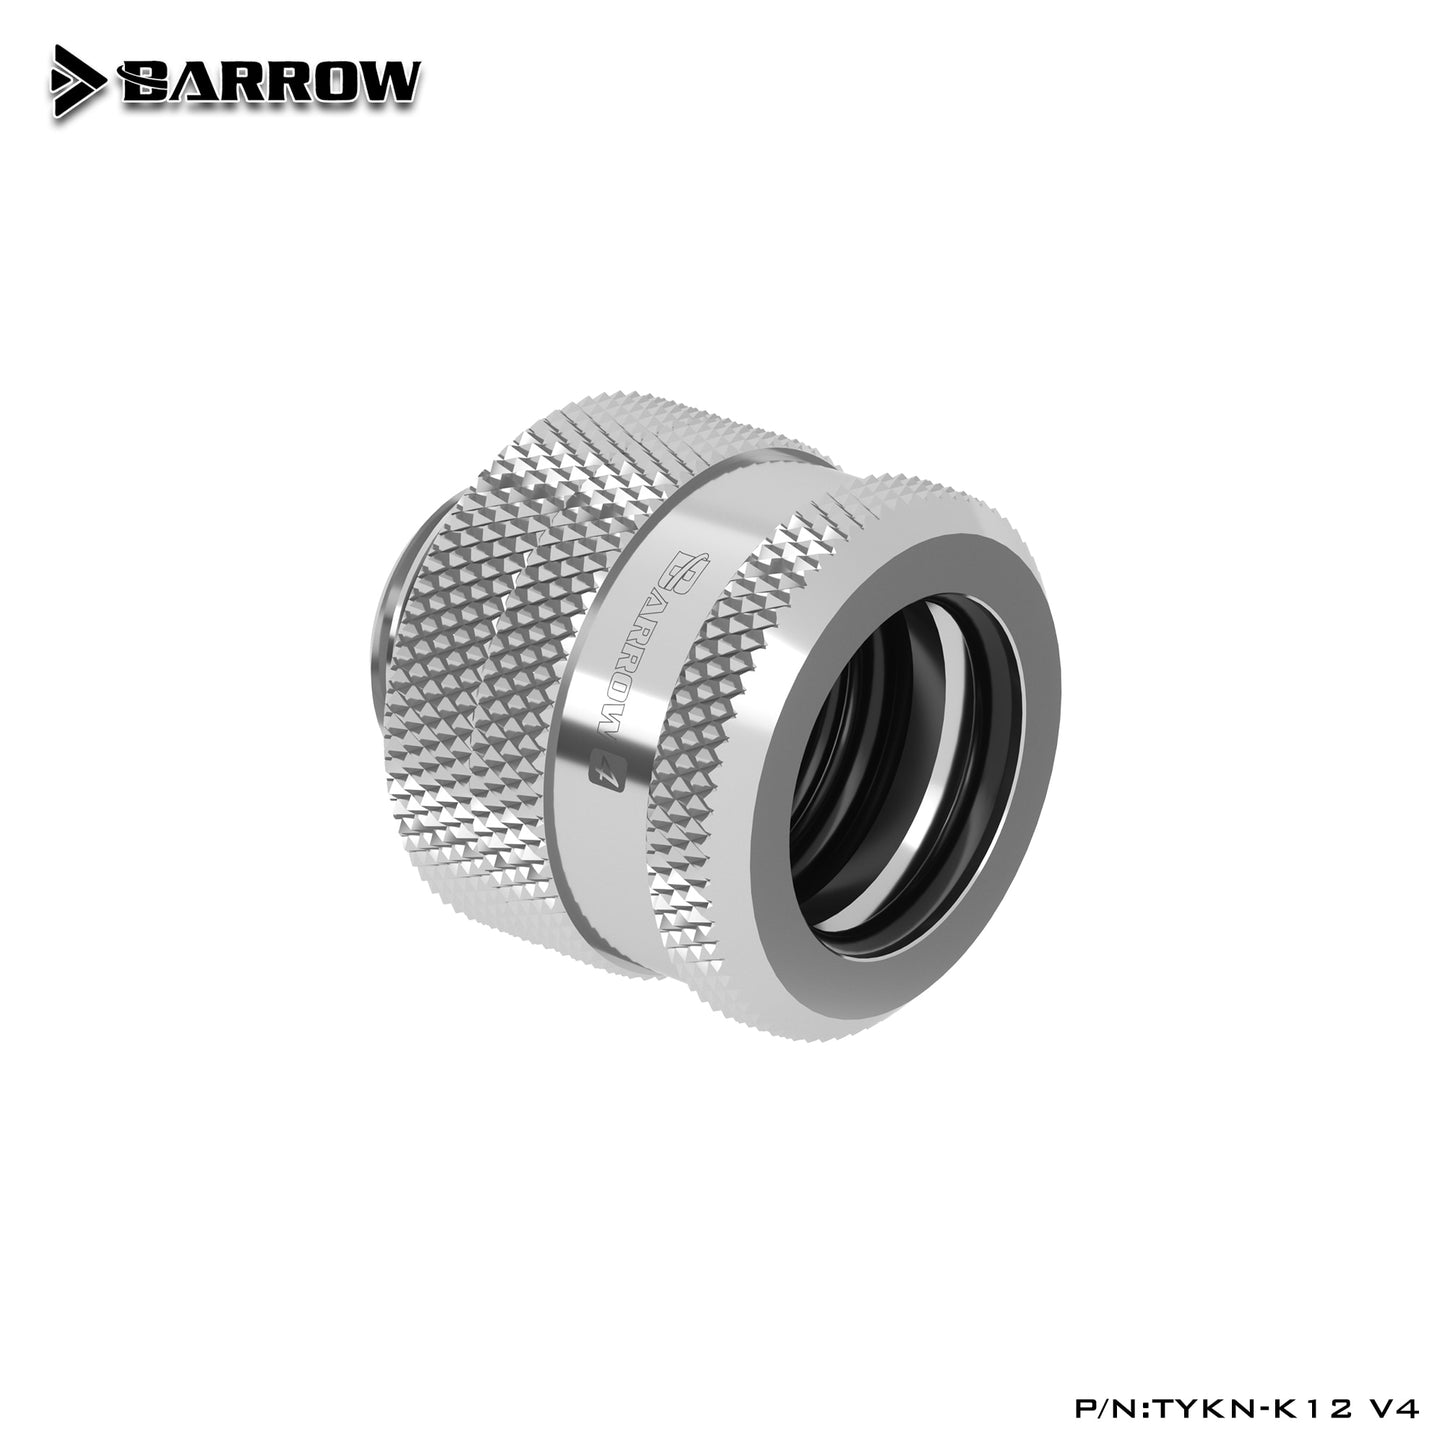 Barrow OD12mm Hard Tube Fittings, G1/4 Adapters For OD12mm Hard Tubes, TYKN-K12 V4